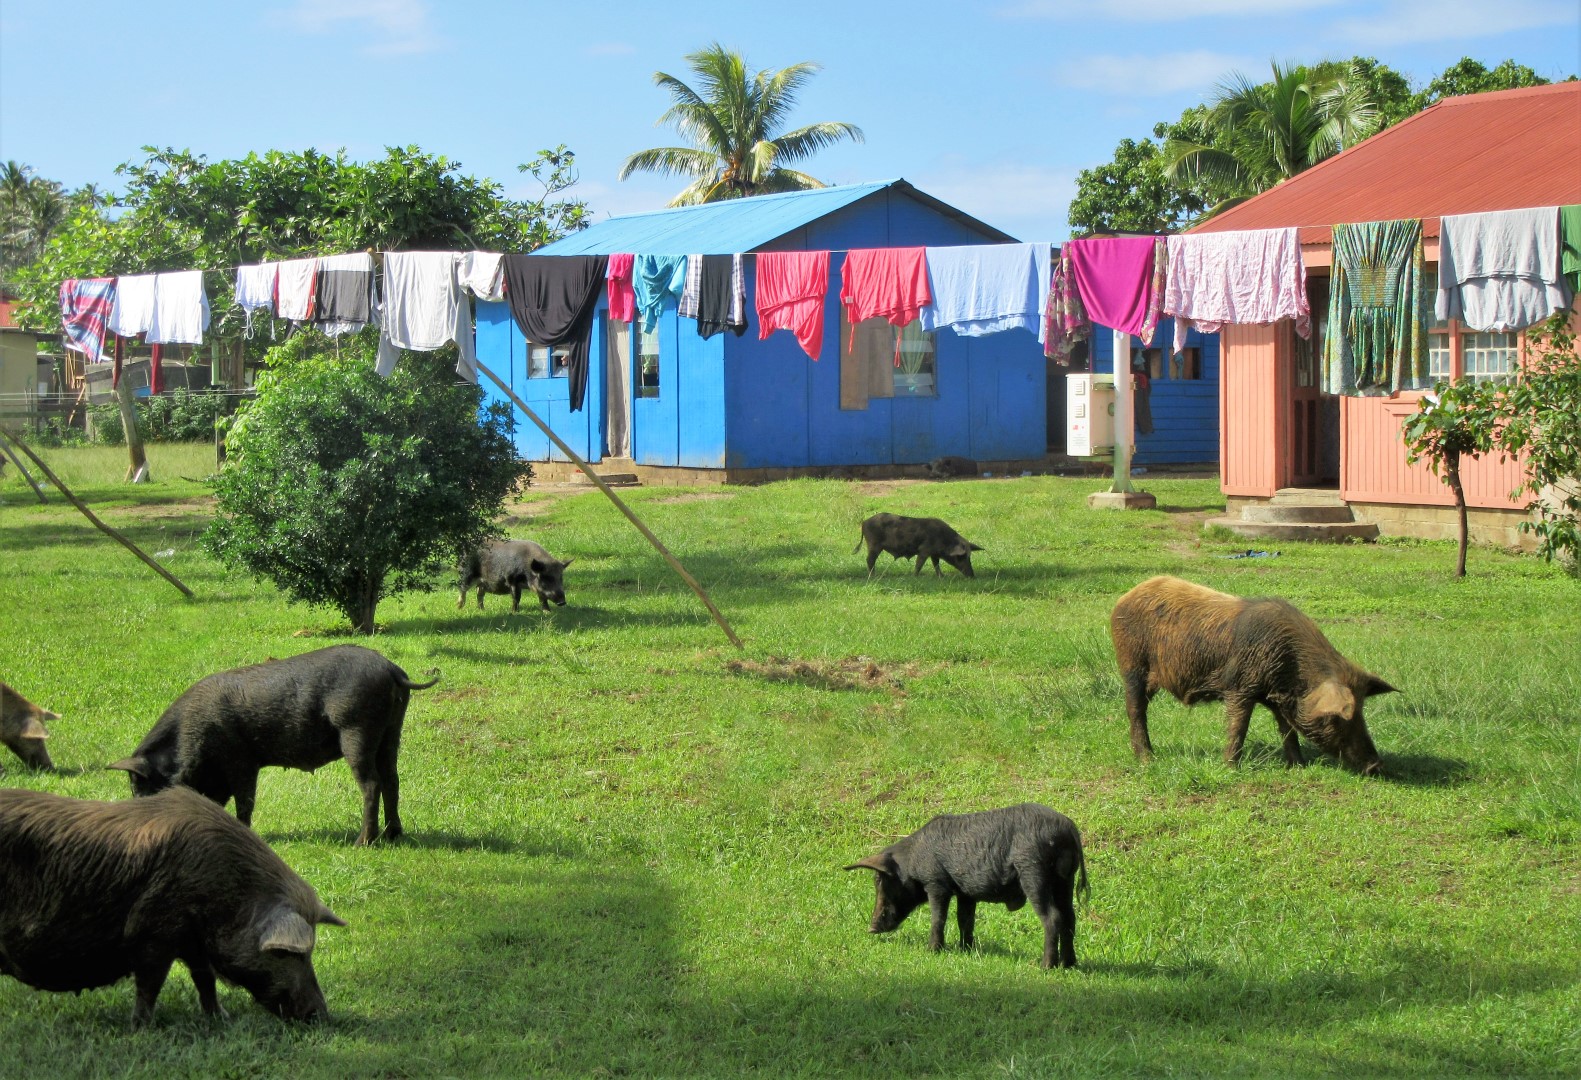 Tongan pigs and laundry, 2016, photo by Wm Adams (billtrips.com)